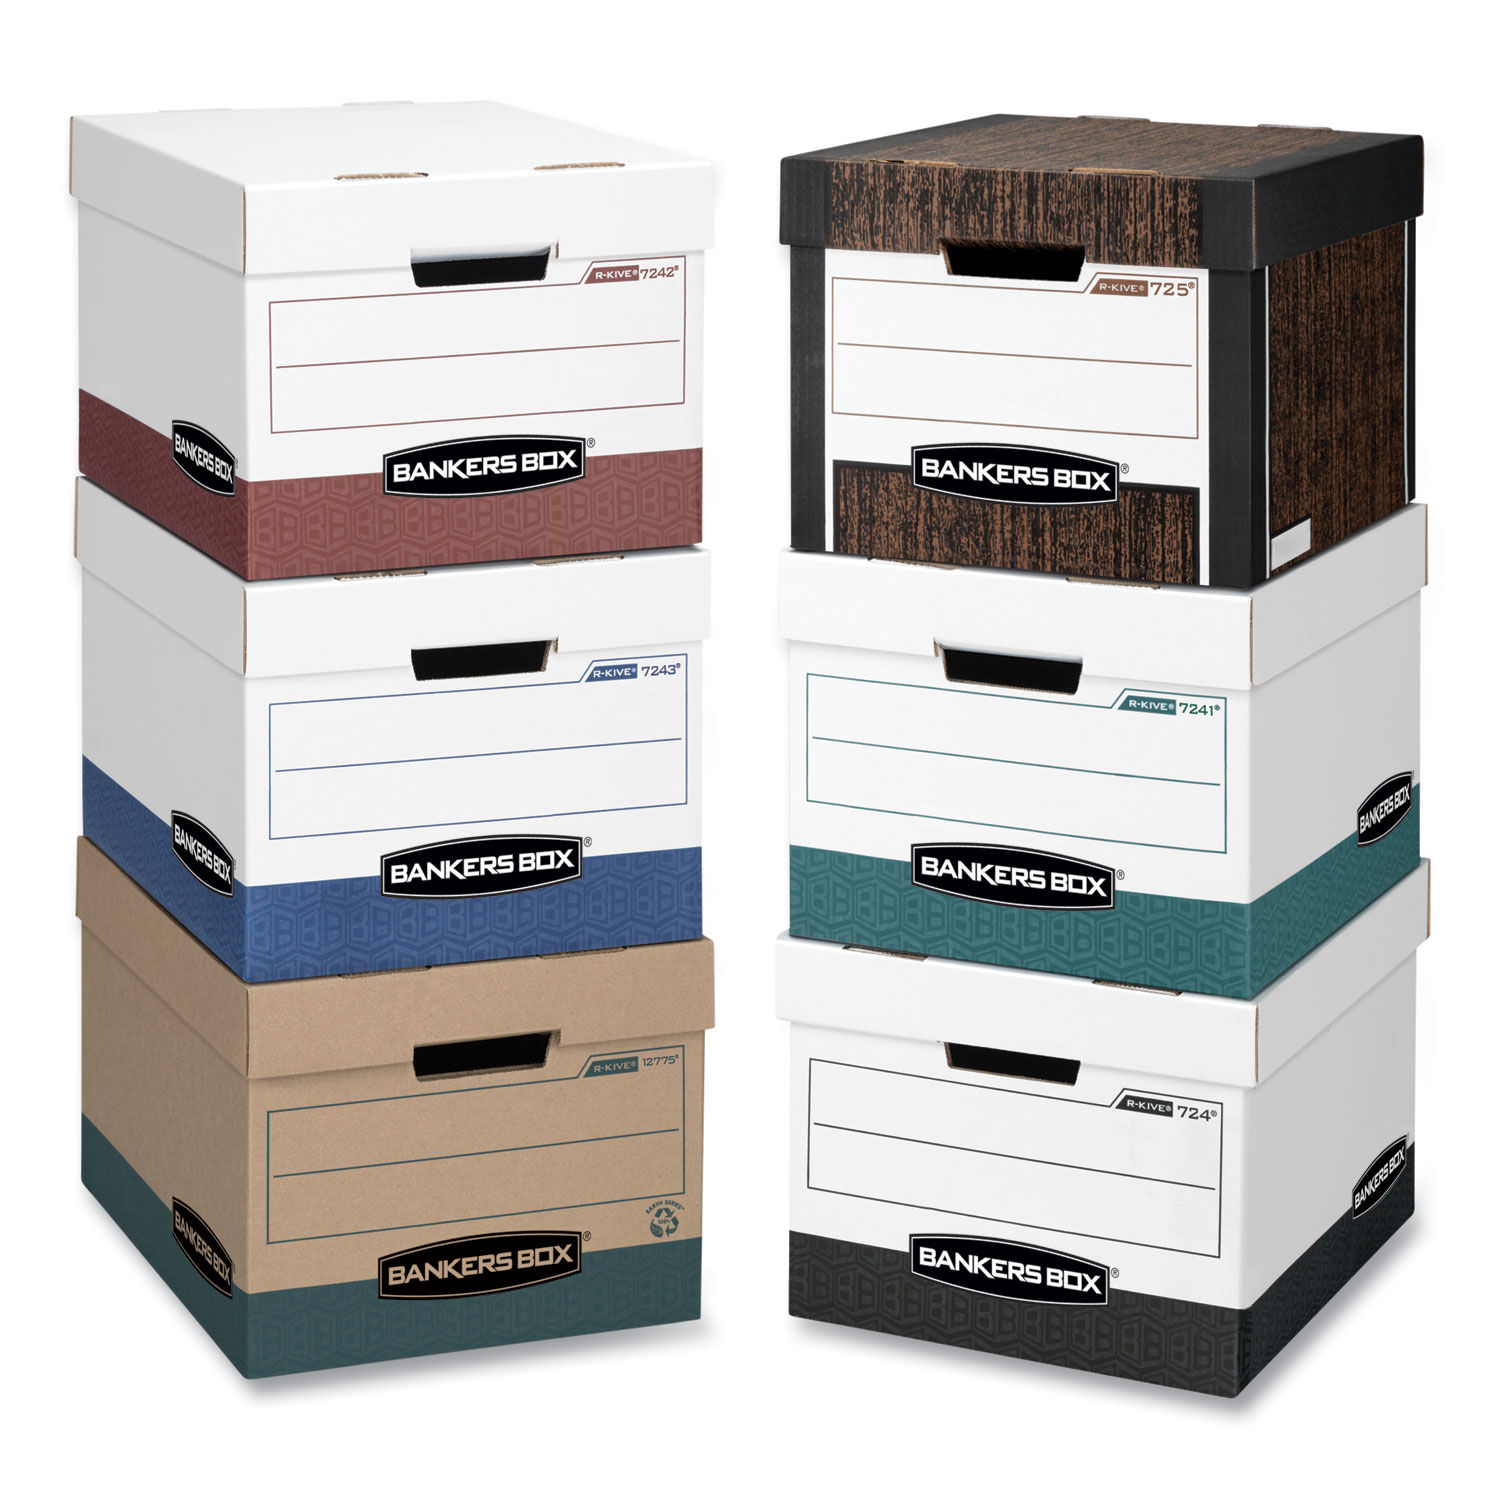 R-KIVE Heavy-Duty Storage Boxes by Bankers Box® FEL12775